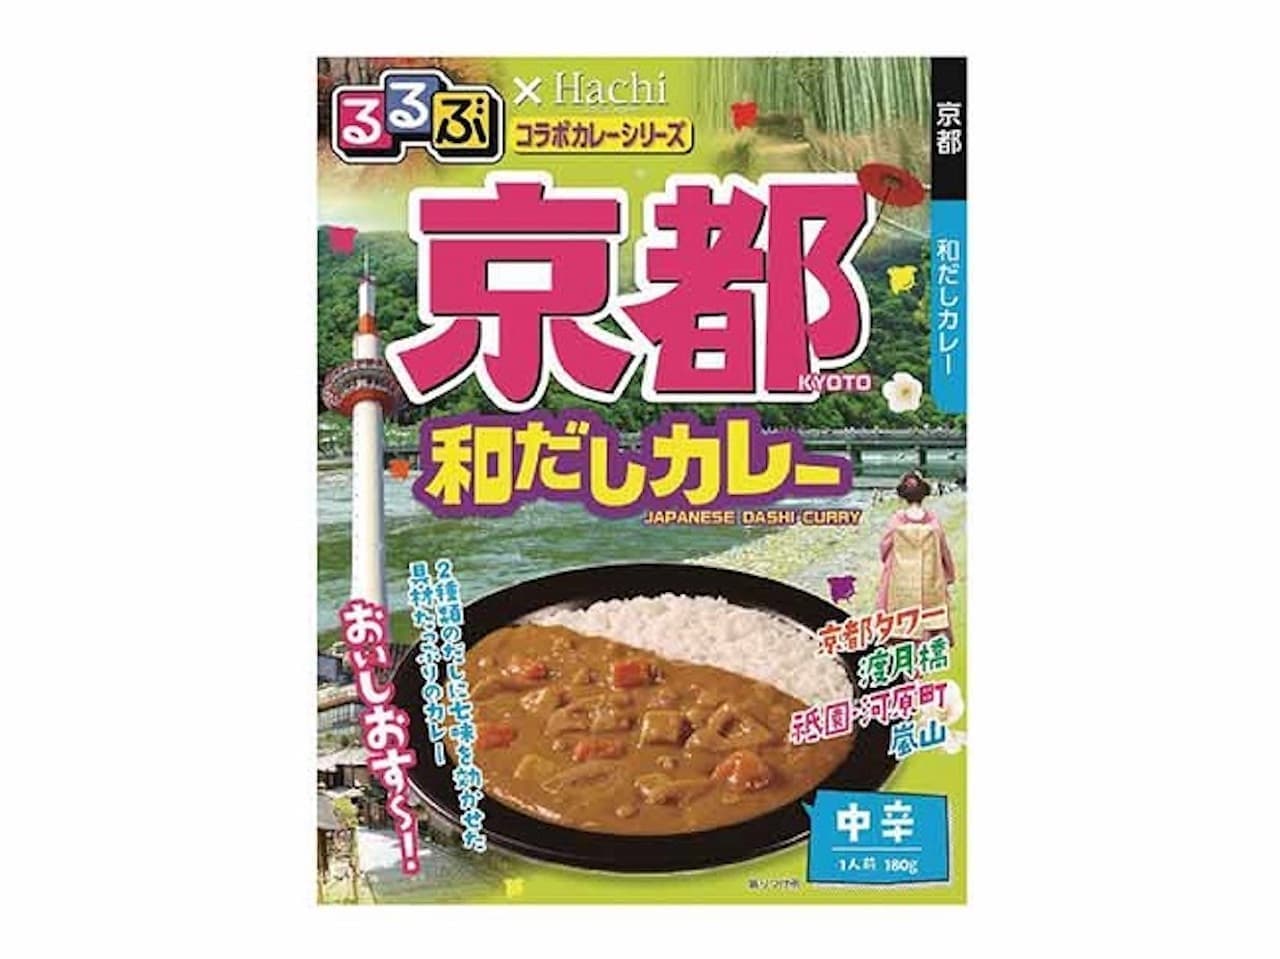 Lawson Store 100 "Rurubu x Hachi Collaboration Curry Series Kyoto Japanese Dashi Curry Medium Spicy"